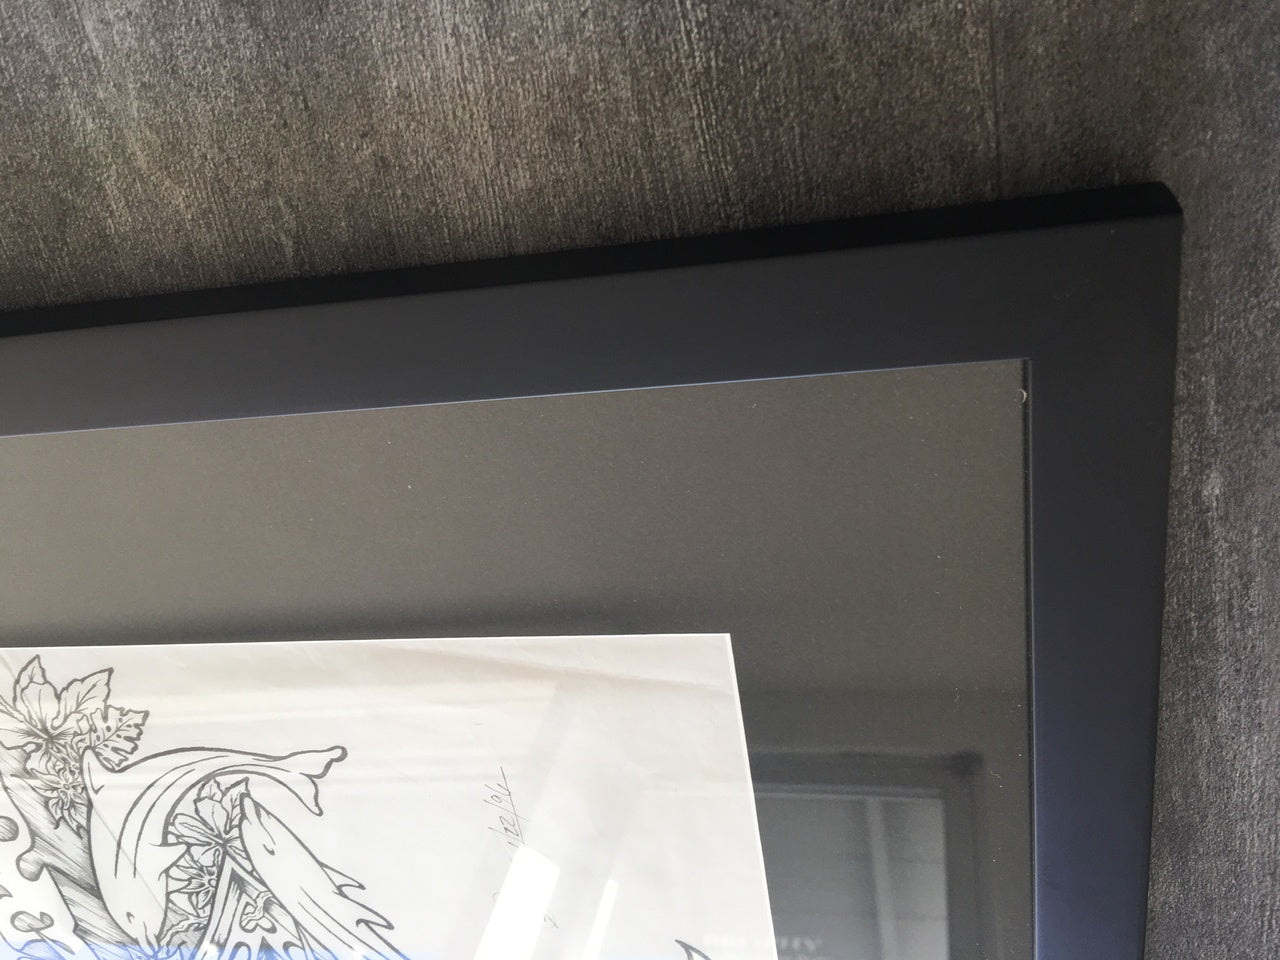 SOLD!  Lulu's Cafe Graphite Sketch and Color Sketch 21" x 24" Framed in black frame and plexiglass